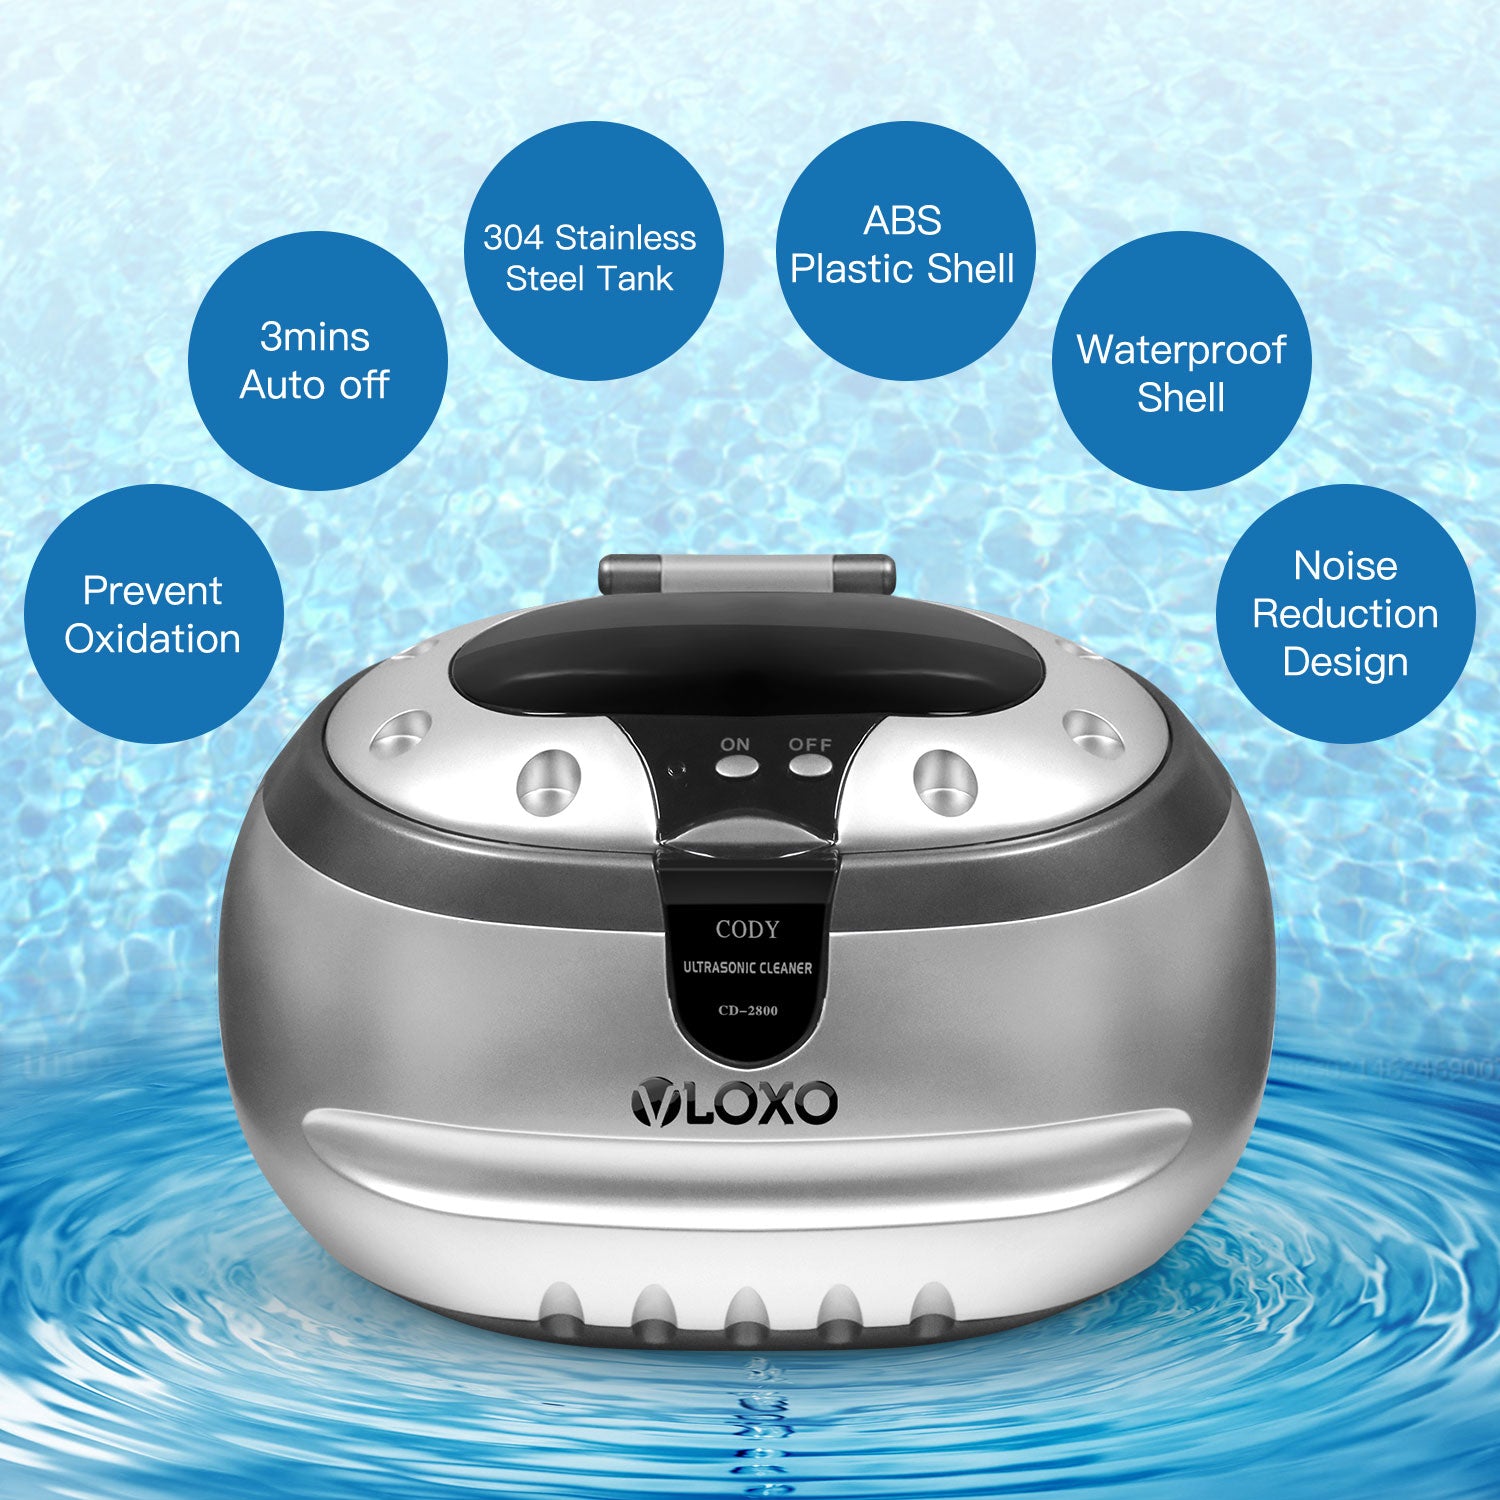 VLOXO CD-2800 Ultrasonic Jewelry Cleaner